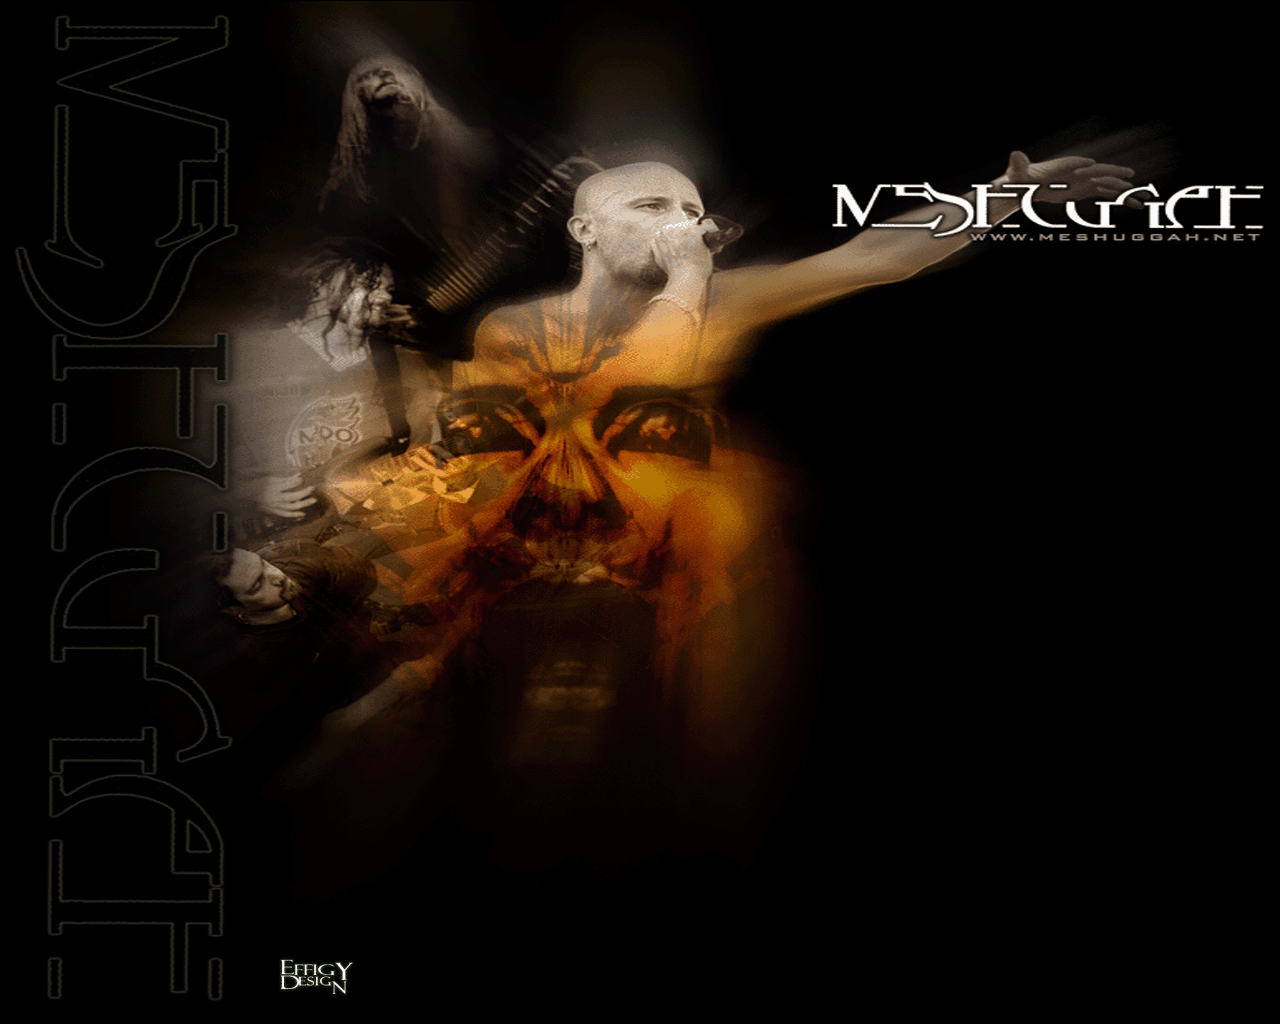 Gallery For Gt Meshuggah Nothing Wallpaper